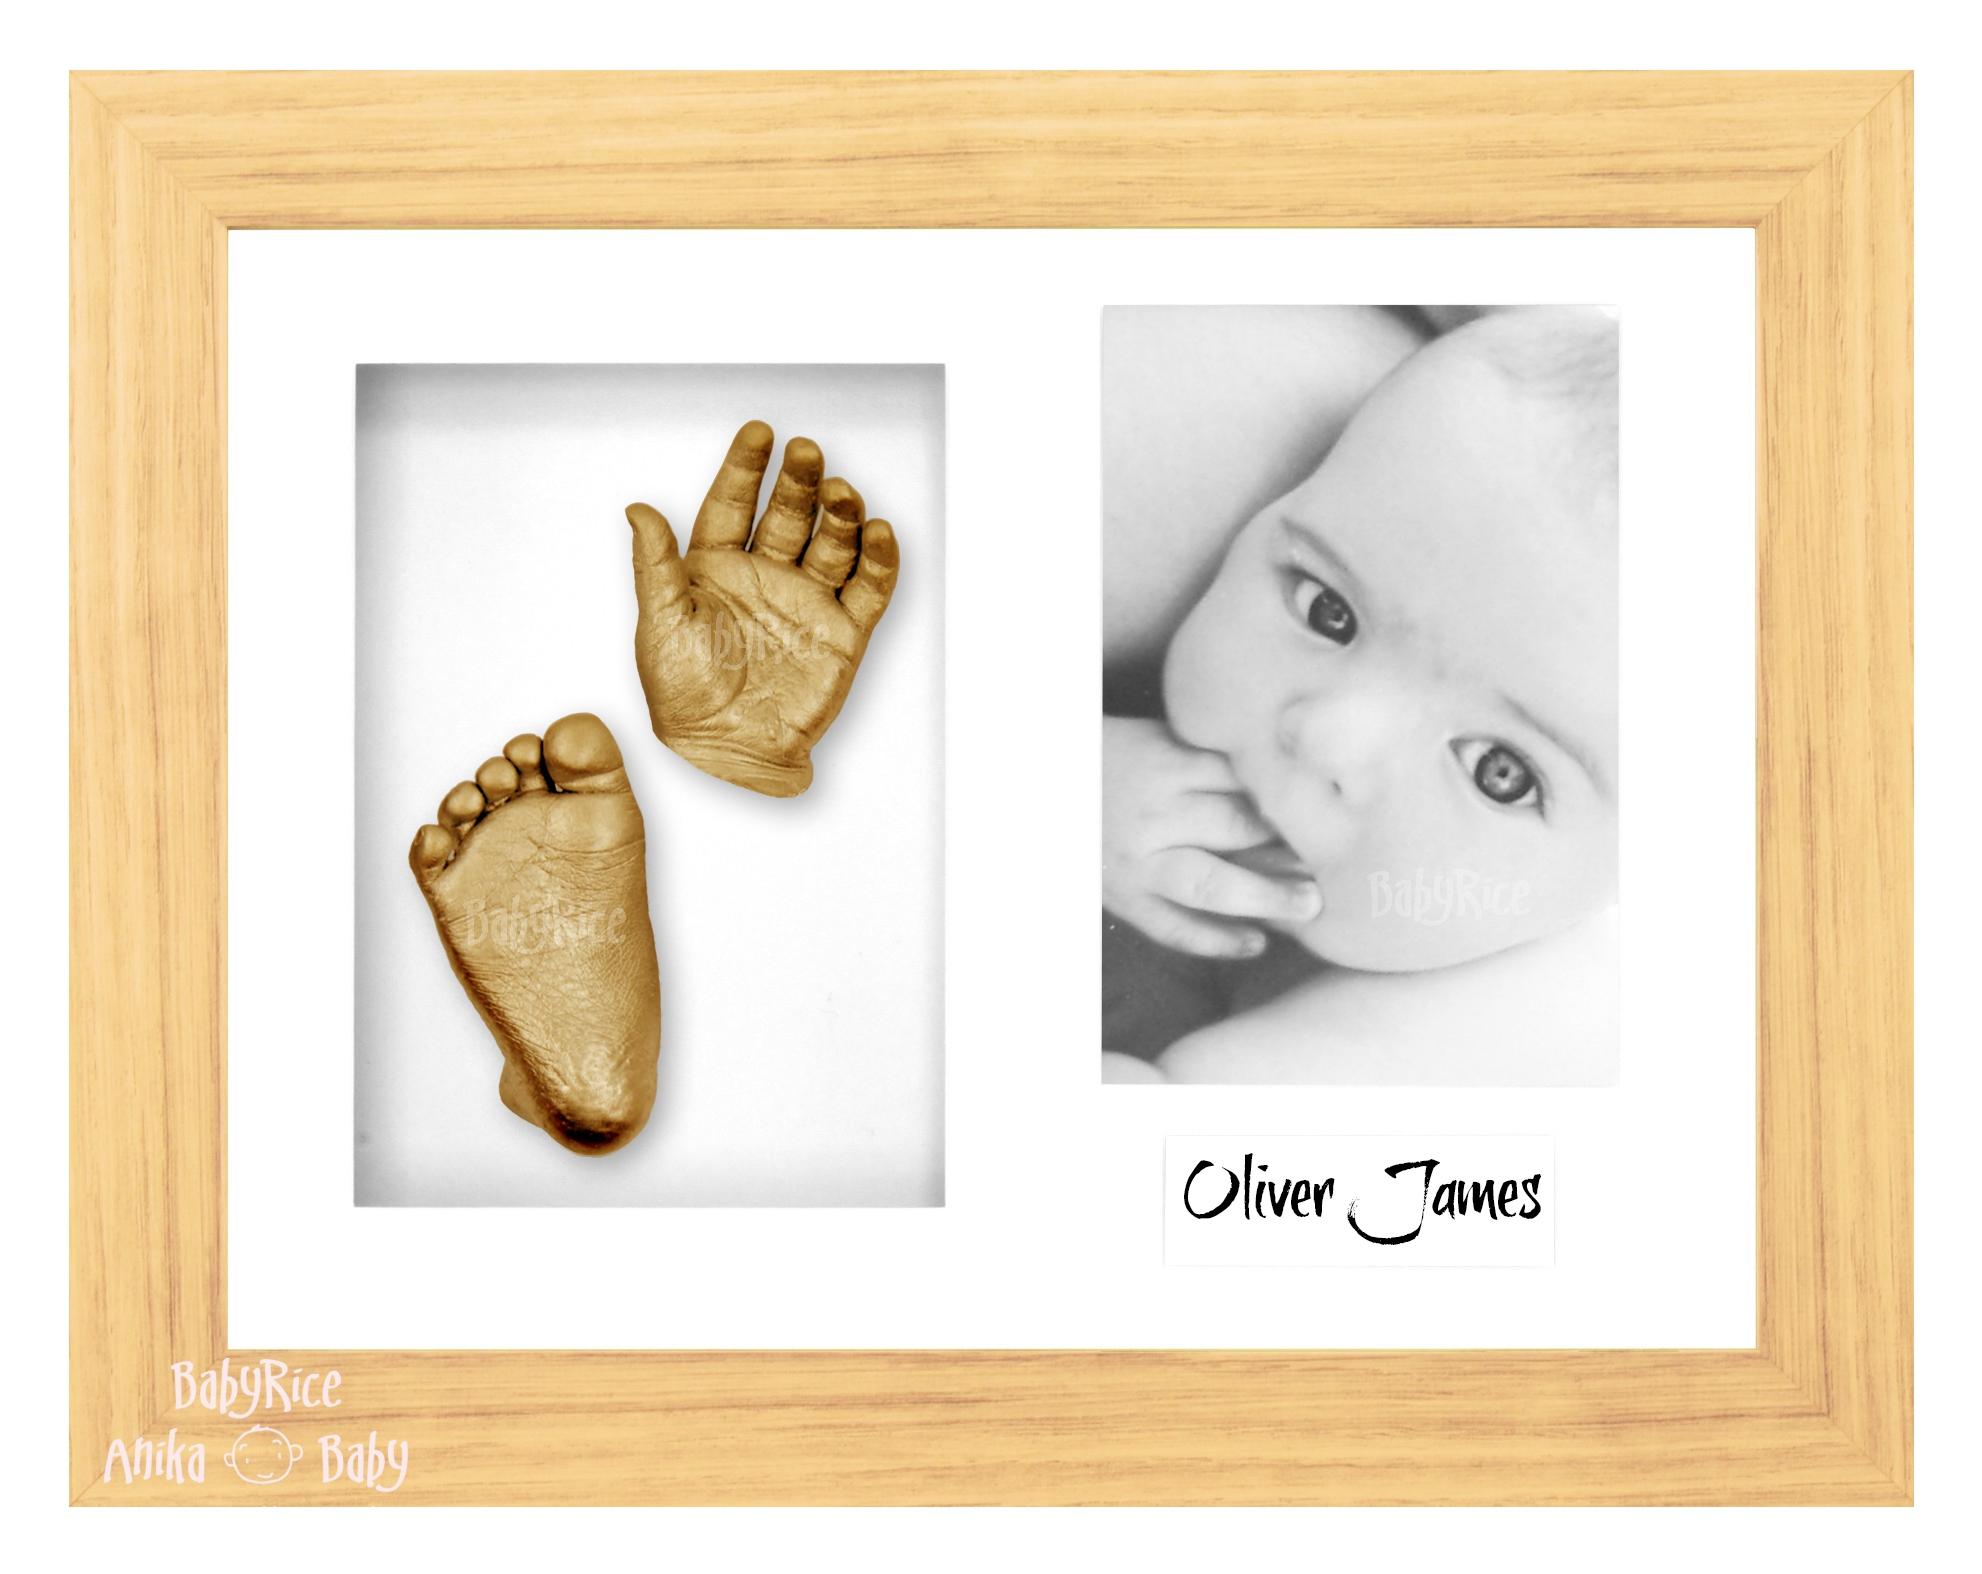 Oak Effect Frame, White Mount, Golden Baby Hand Foot Cast